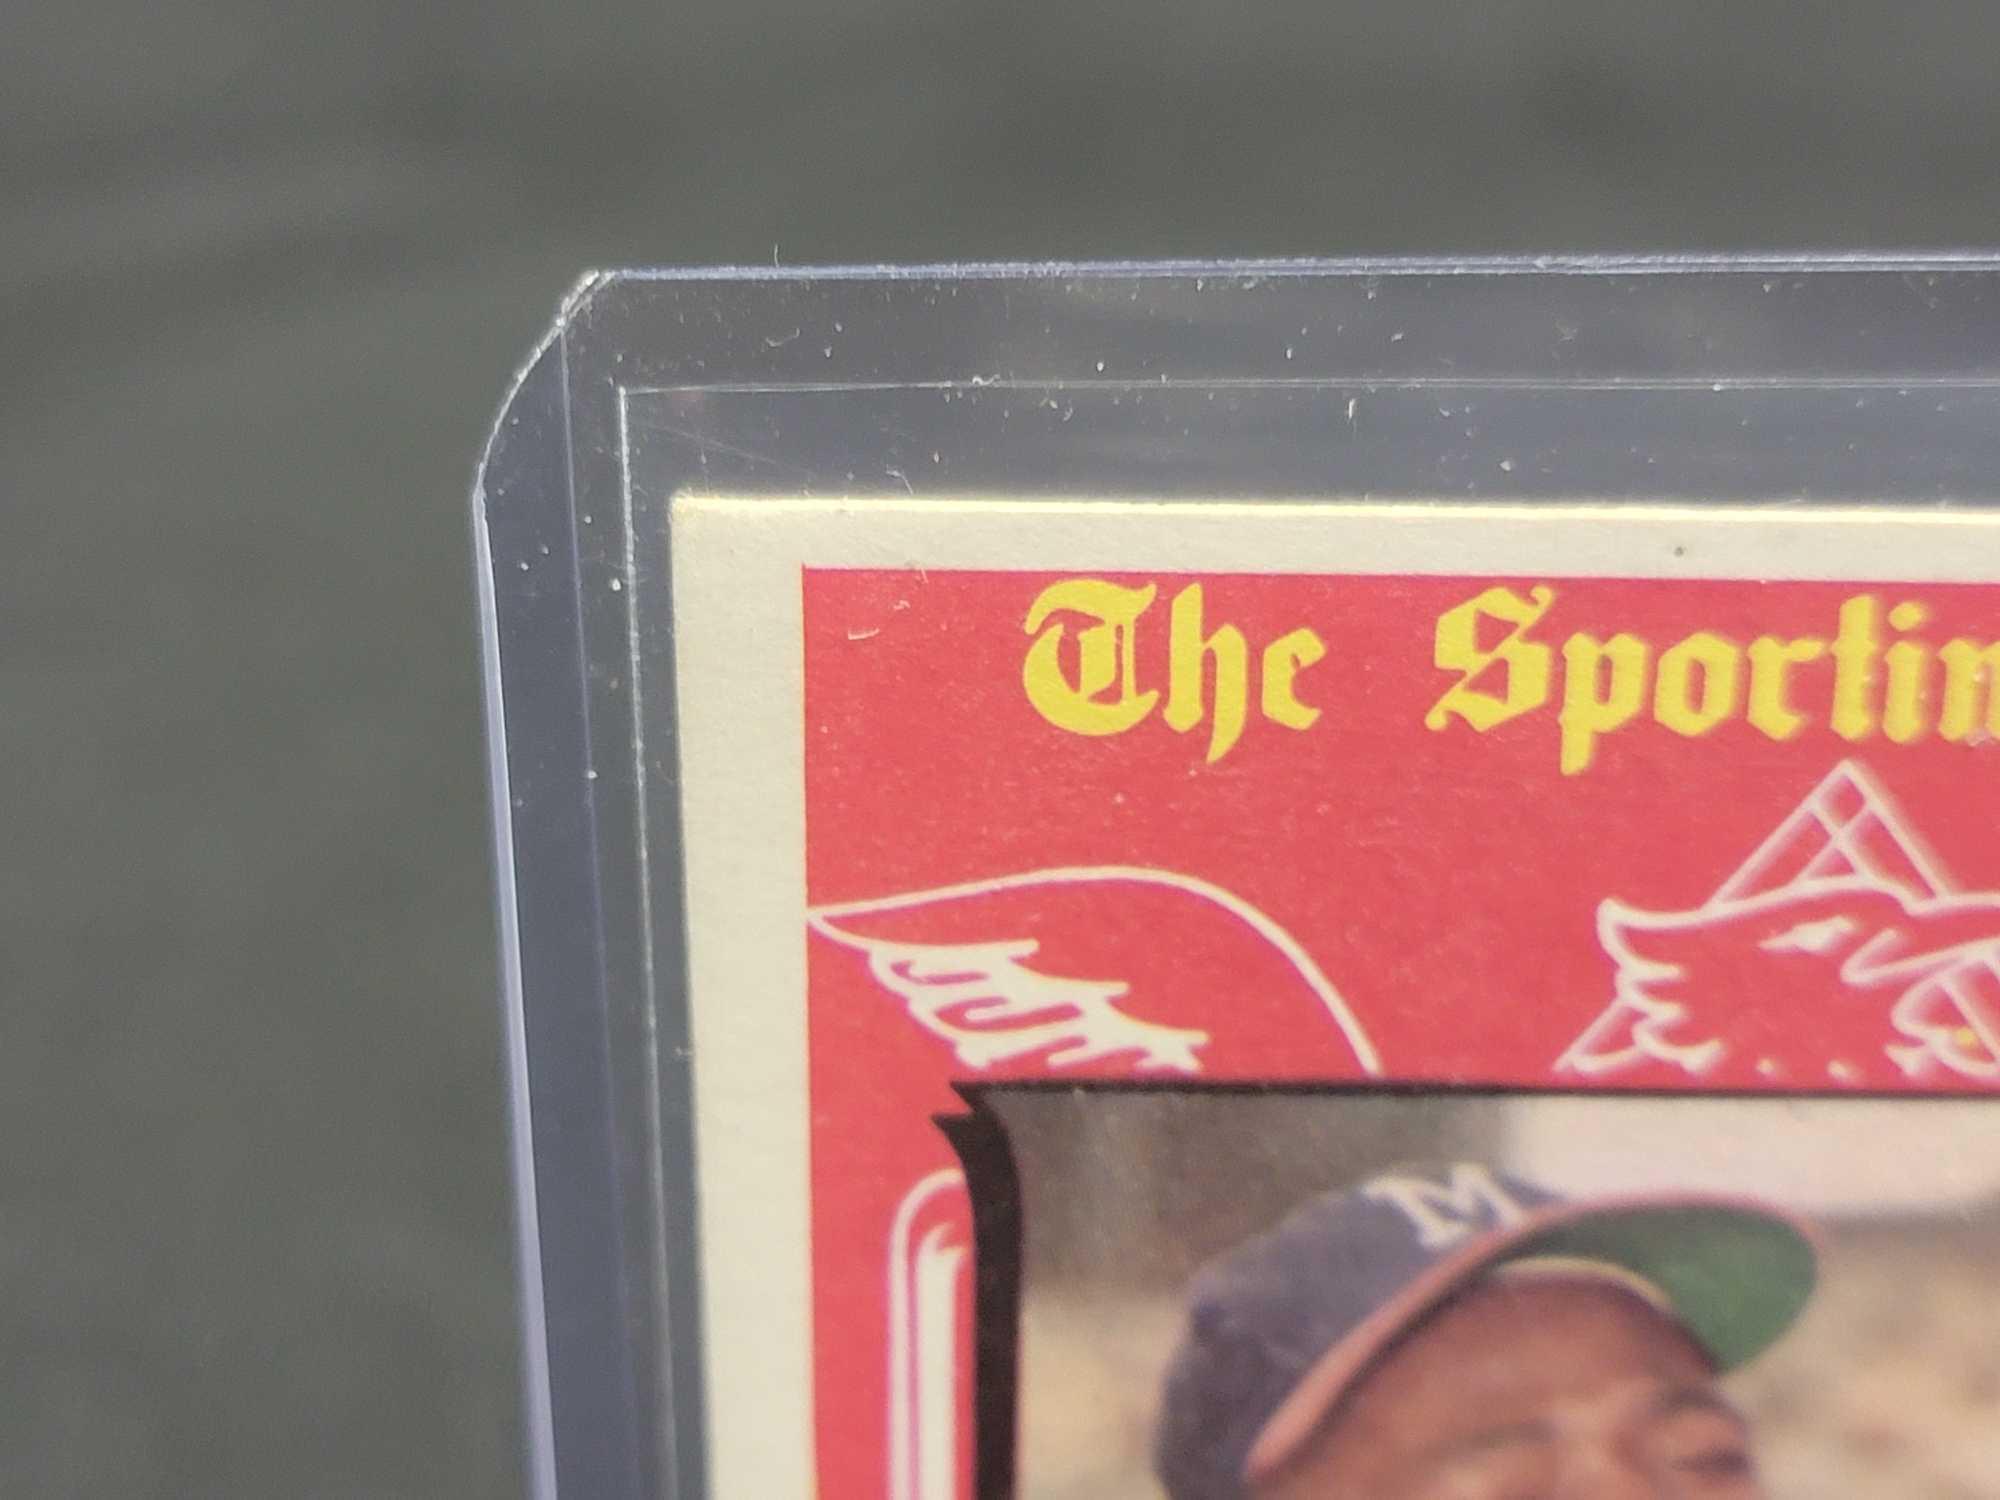 1959 Topps Hank Aaron All Star Baseball Card 561